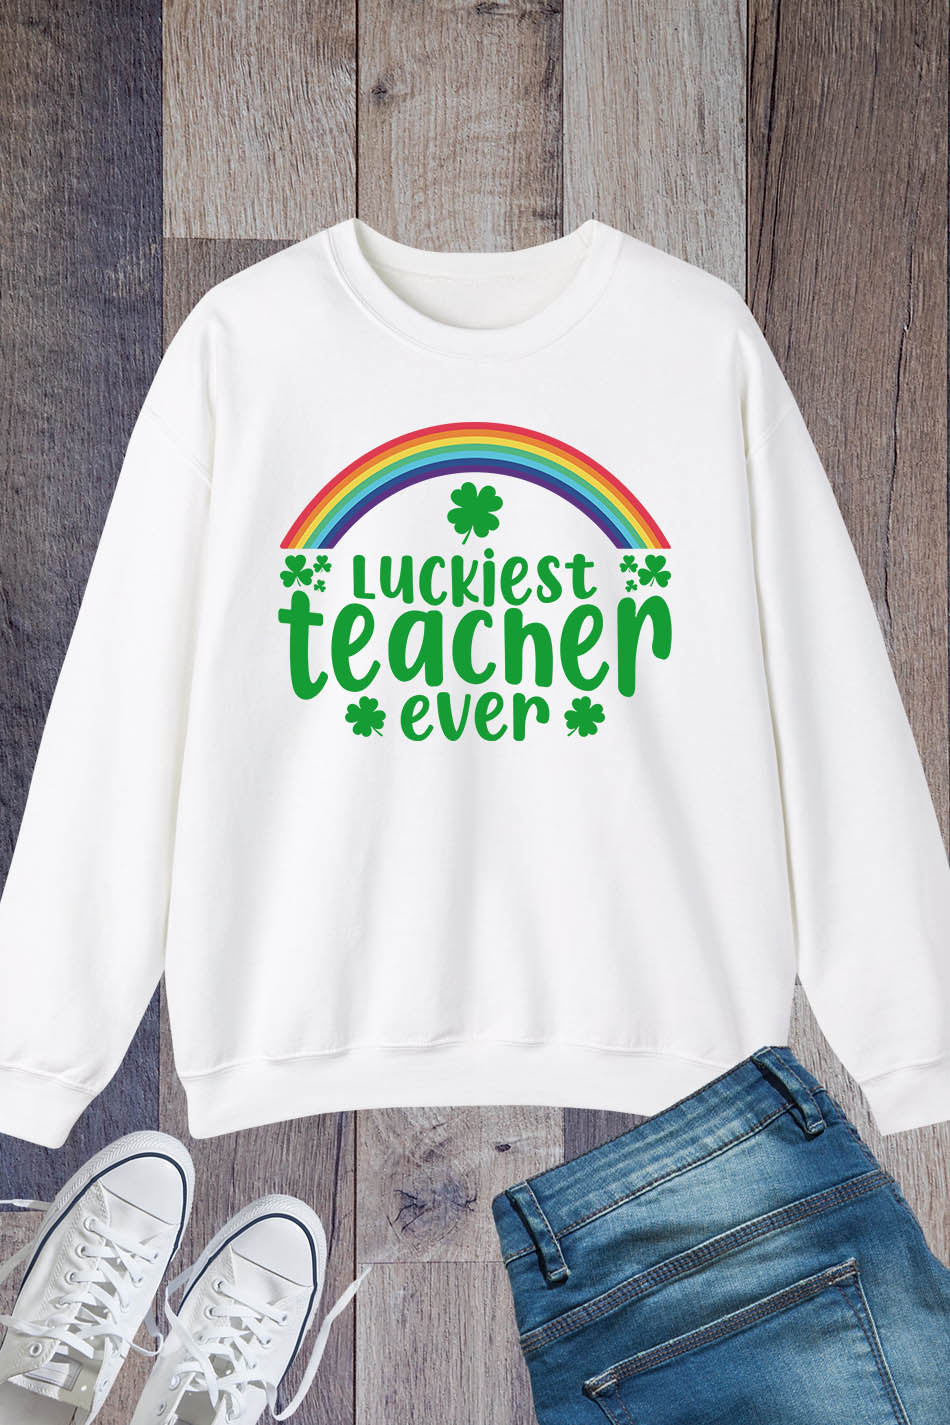 Luckiest teacher ever for St Patricks day Sweatshirt